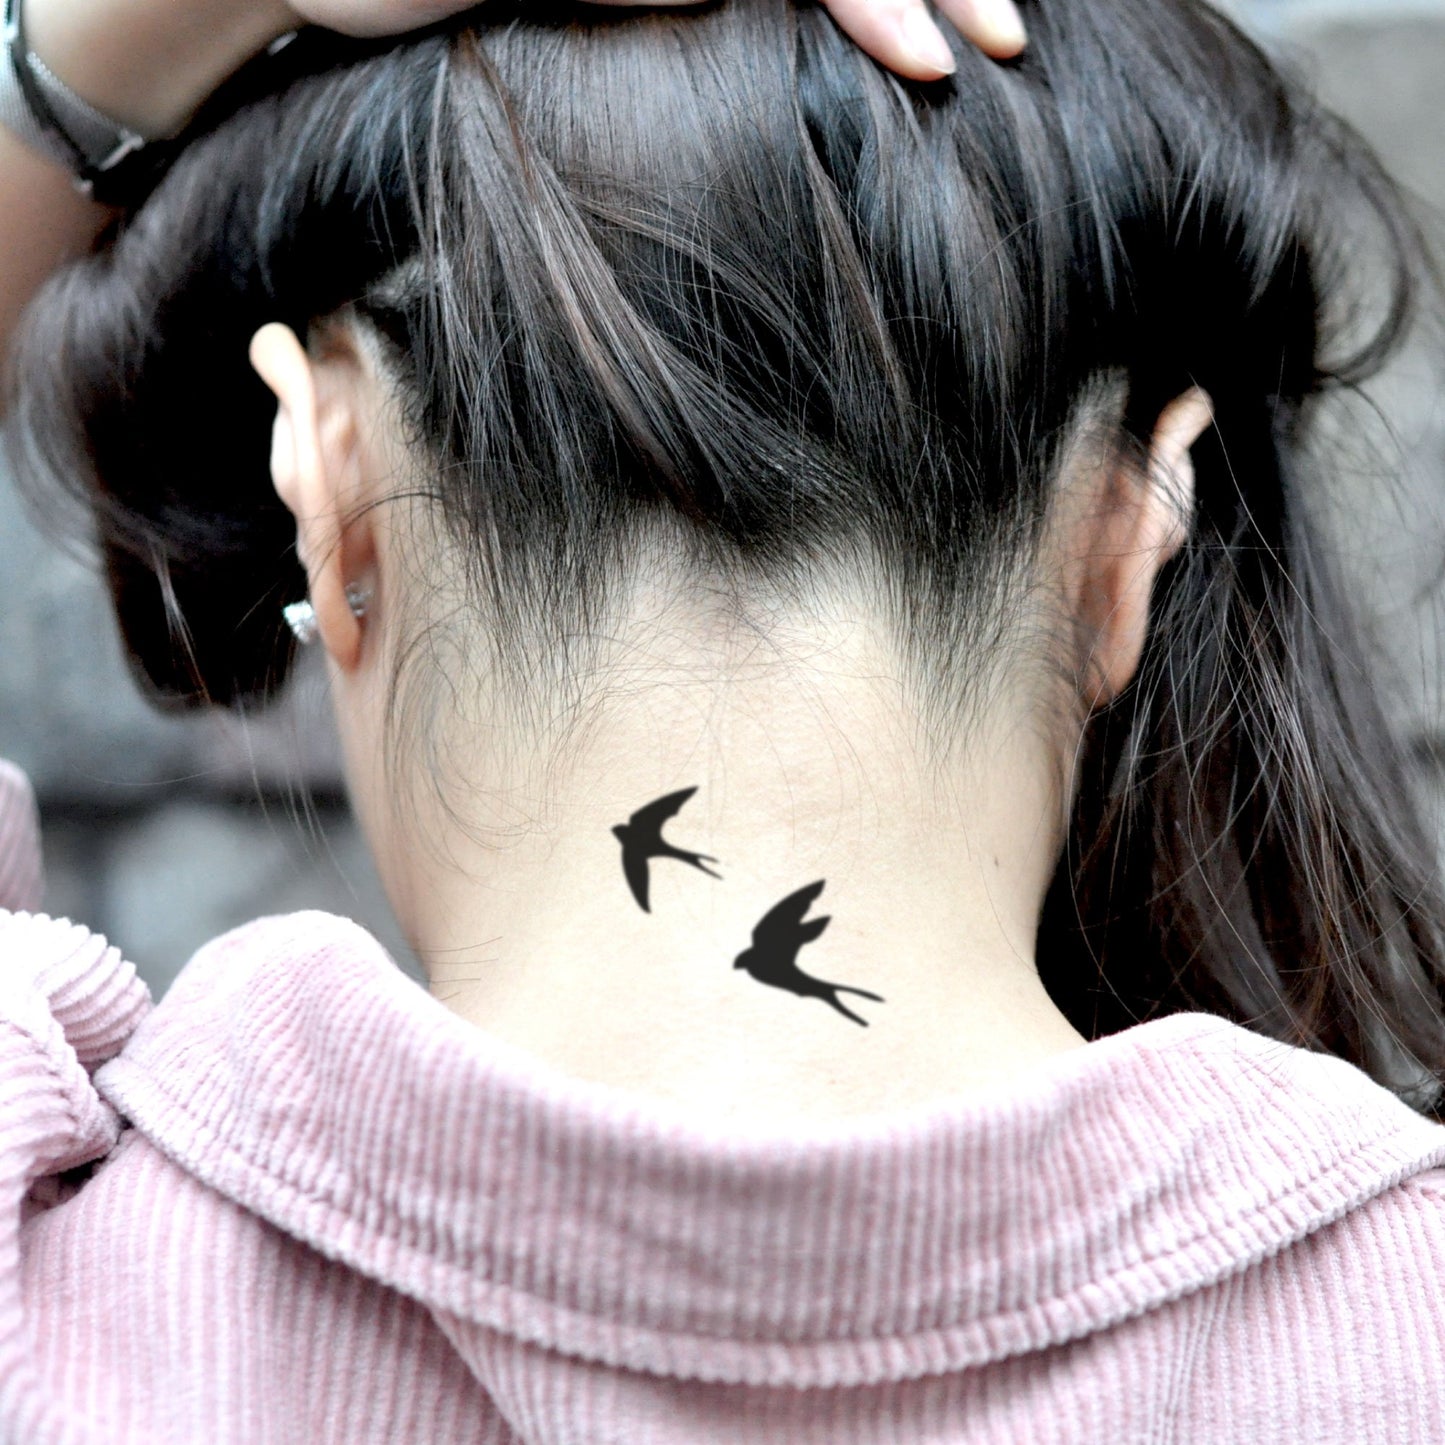 fake small flying bird neck animal temporary tattoo sticker design idea on neck